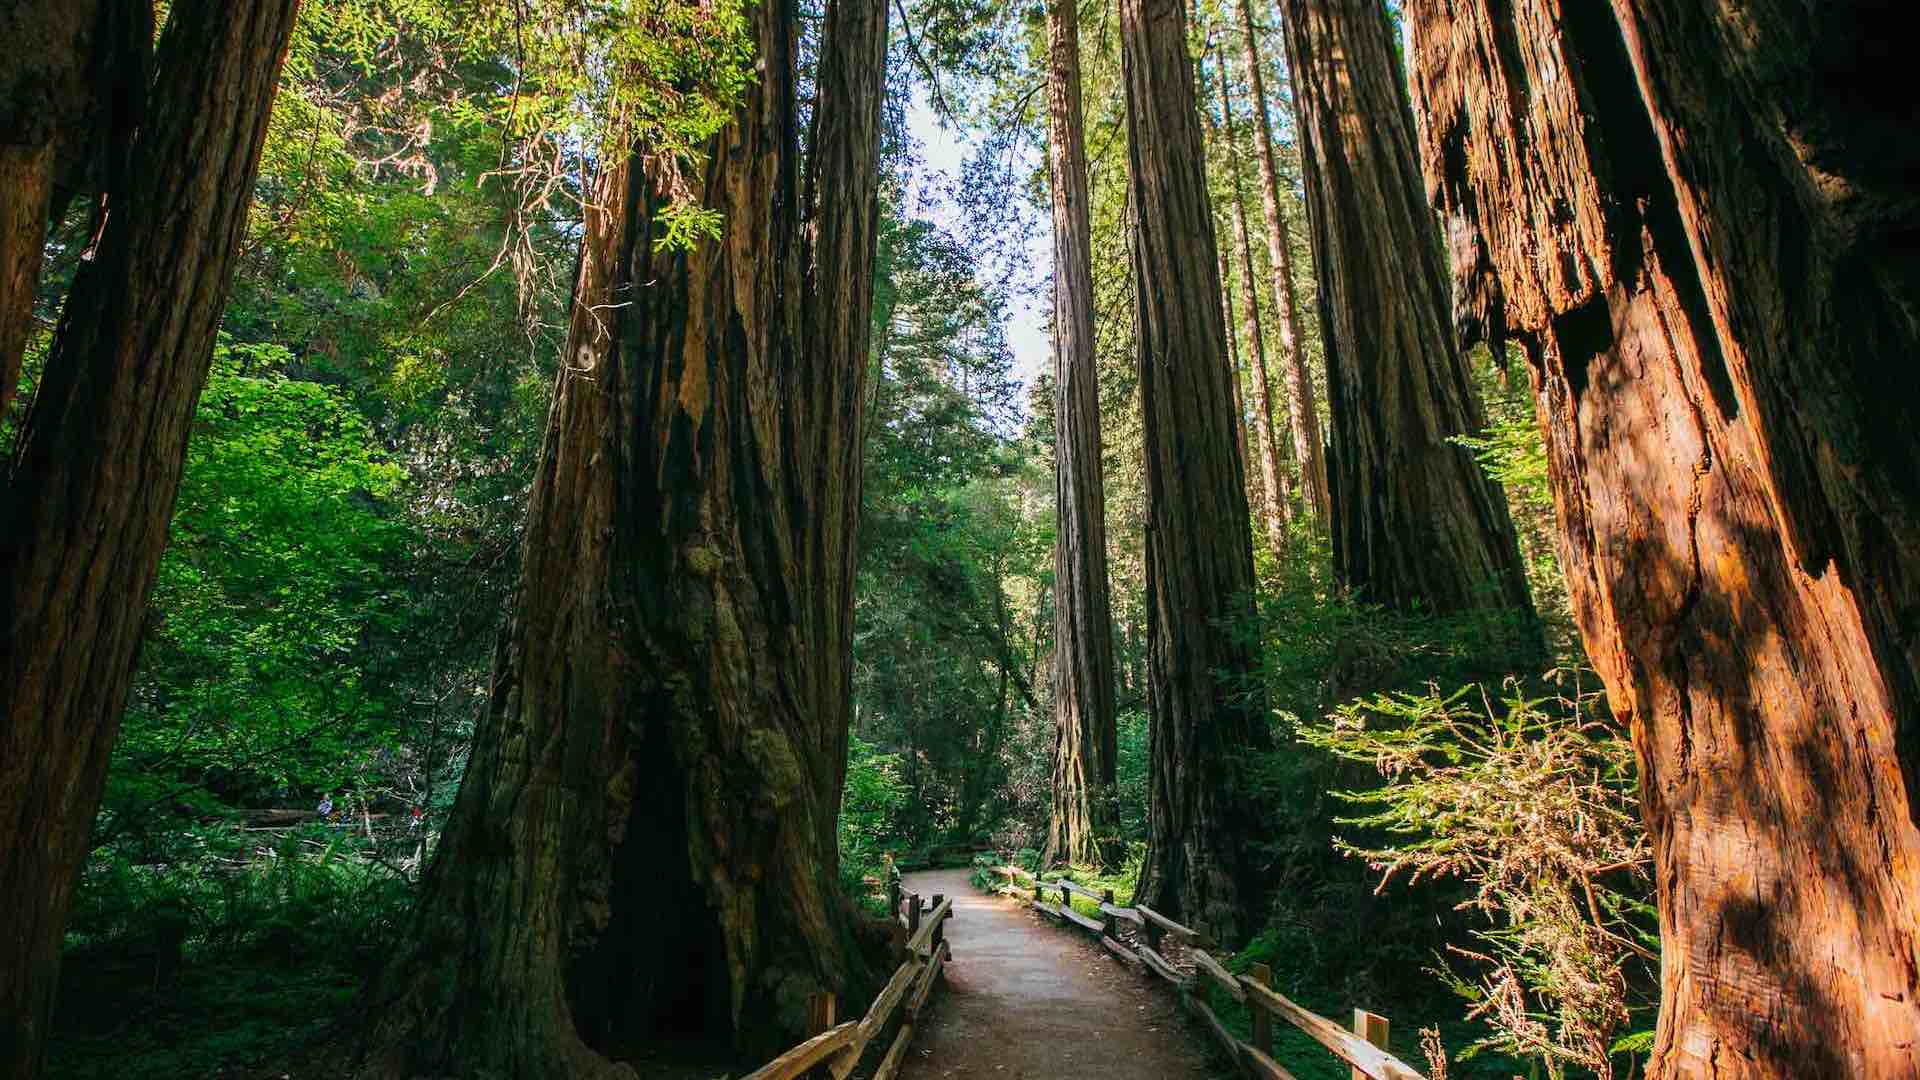 John Muir Forest near San Francisco, California